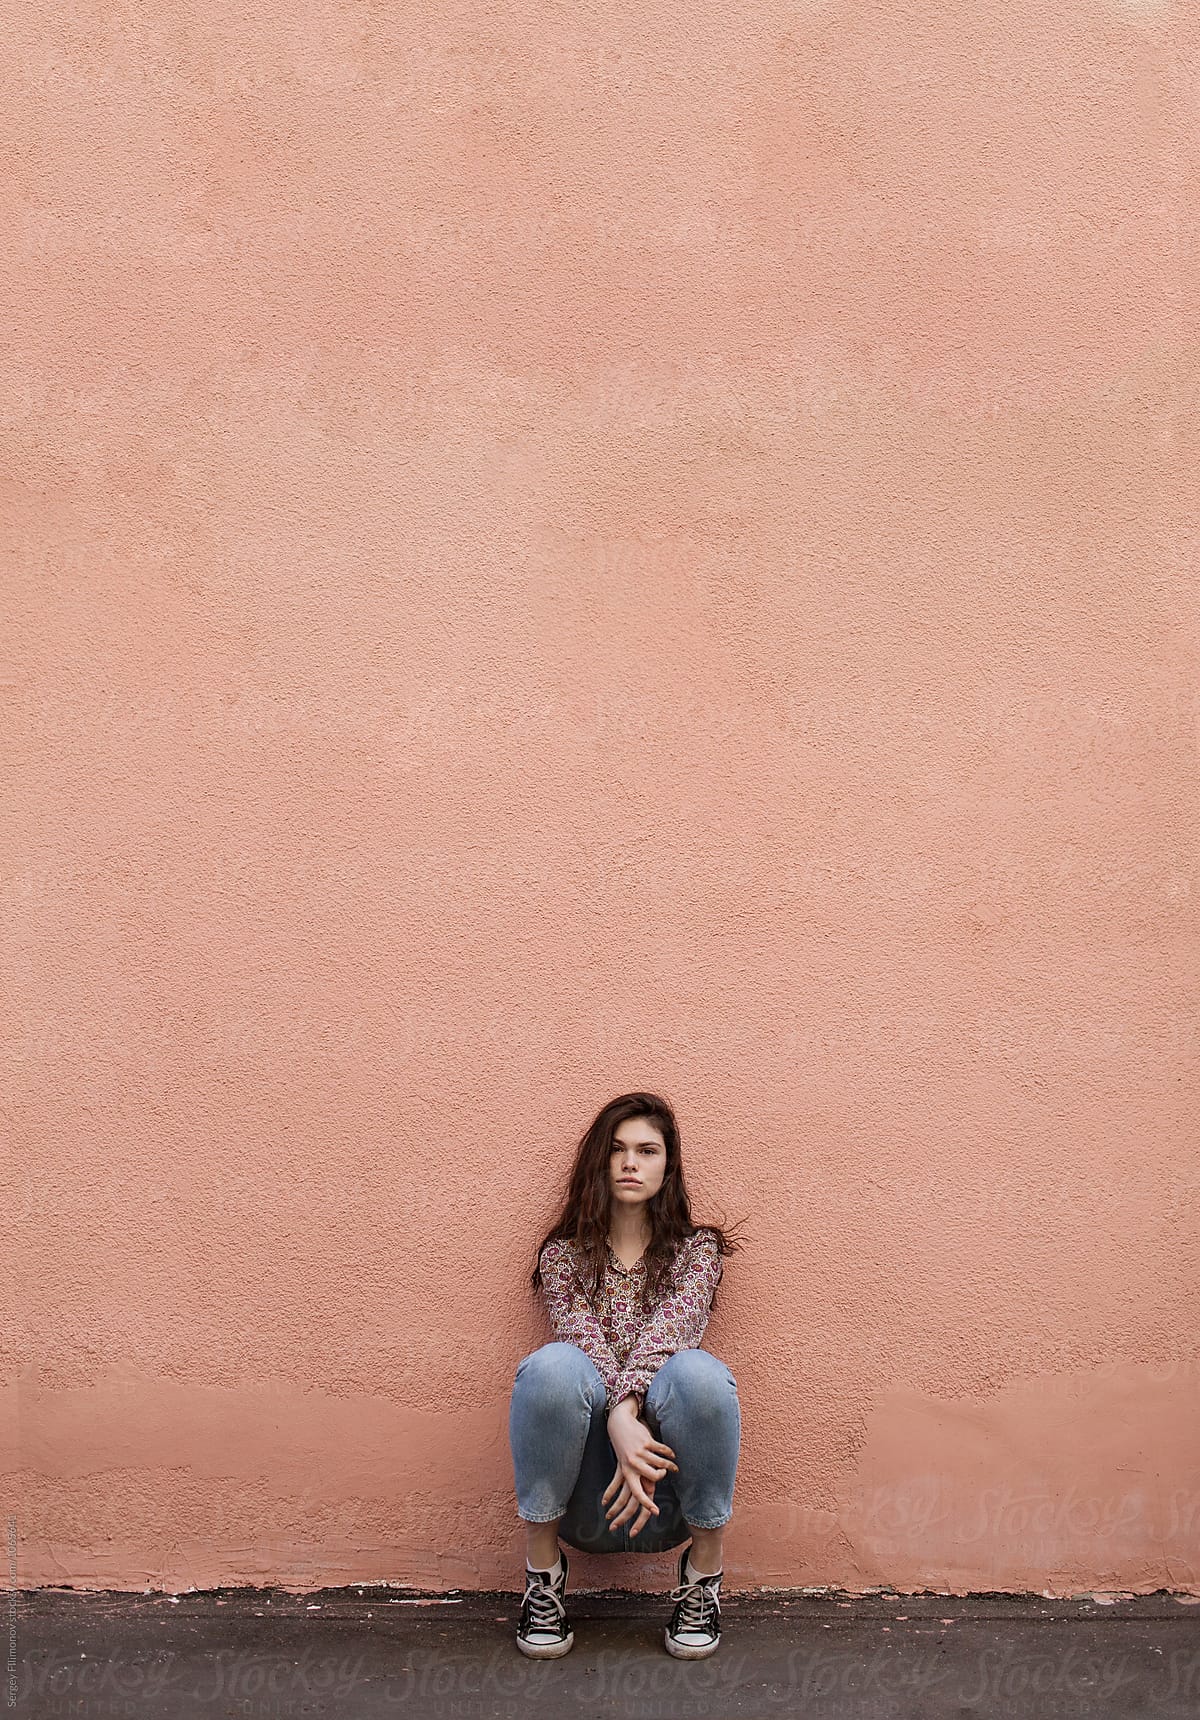 Stylish Teen Girl Sitting Near Wall By Stocksy Contributor Sergey Filimonov Stocksy